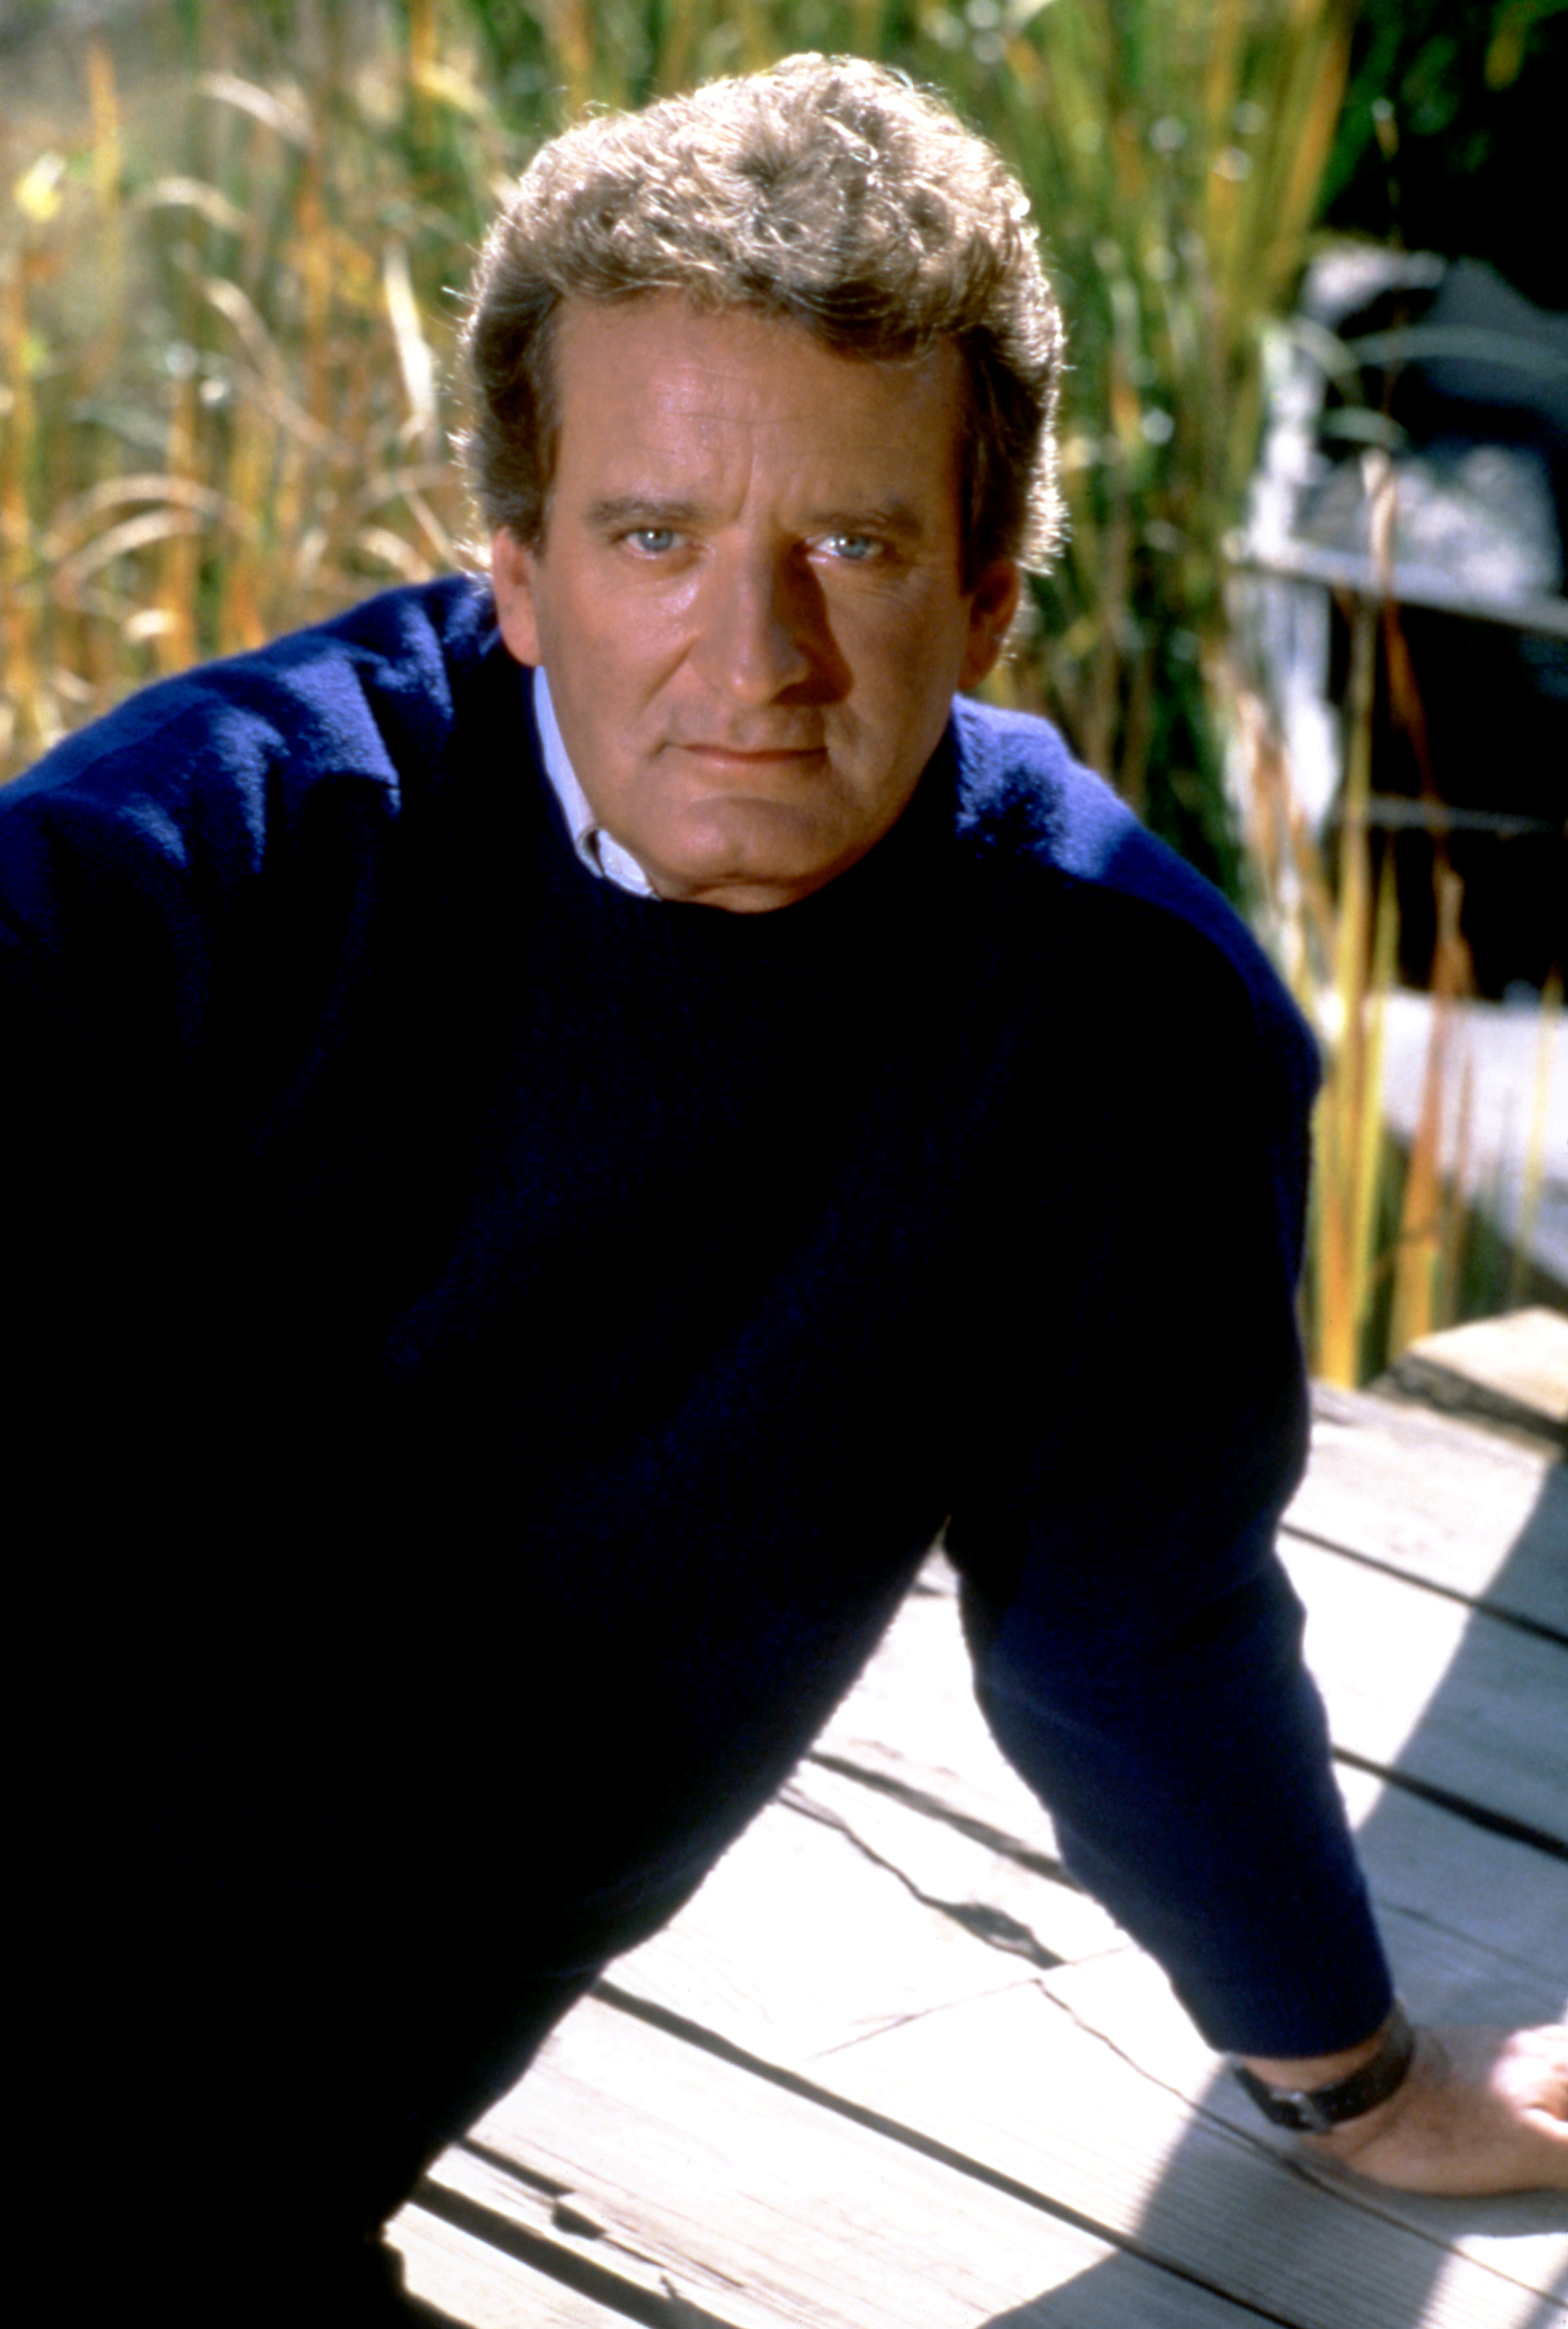 Nicolas Coster of the American television soap opera "Santa Barbara", poses for a portrait in Los Angeles, California, circa 1986. | Source: Getty Images